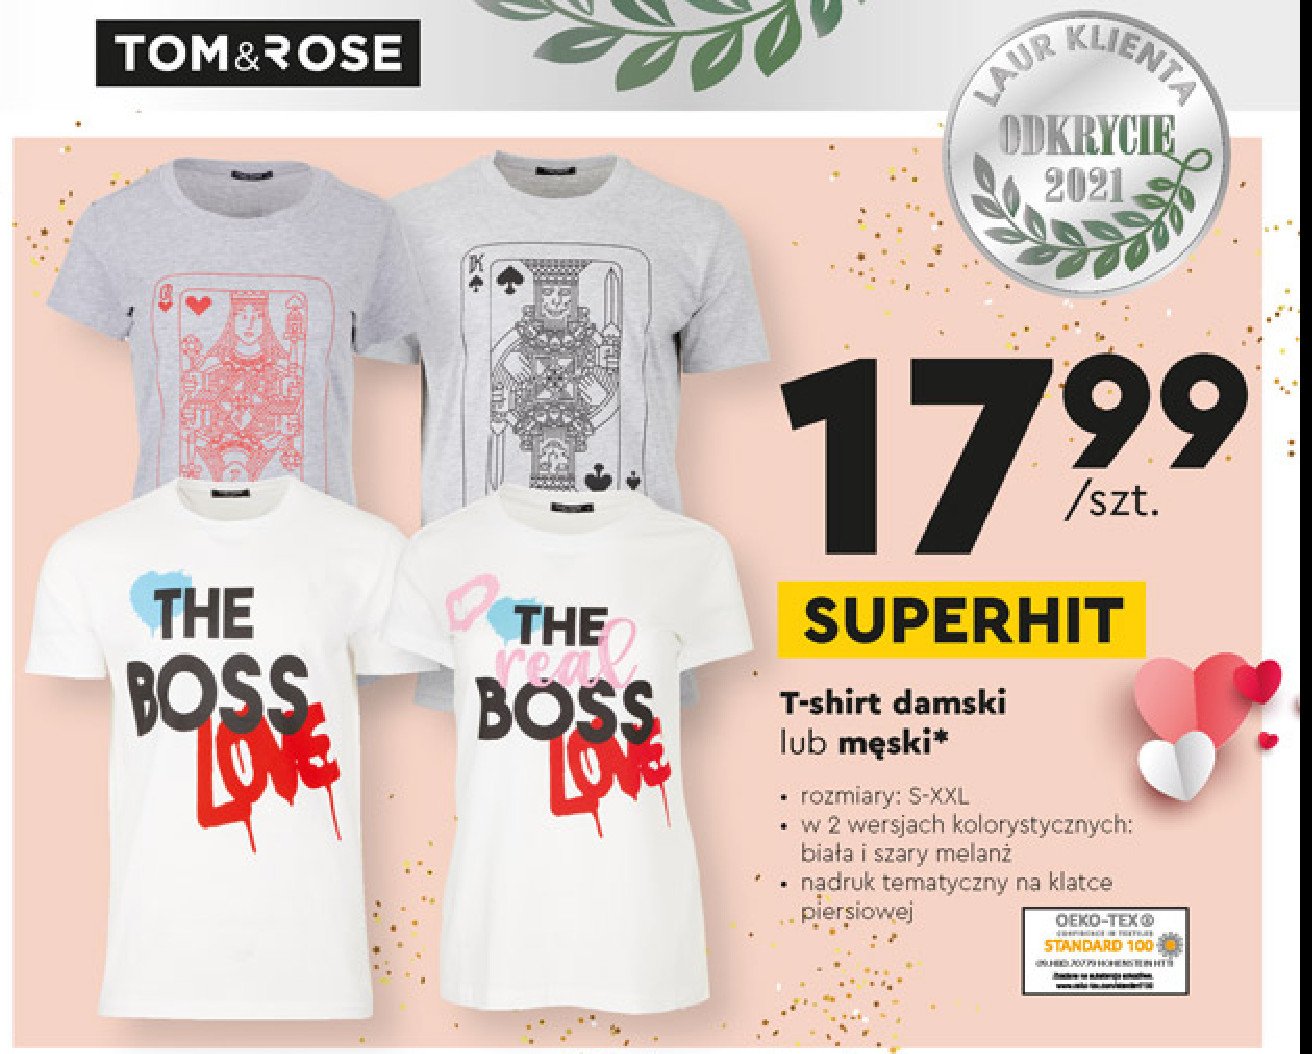 T-shirt męski s-xxl Tom & rose promocja